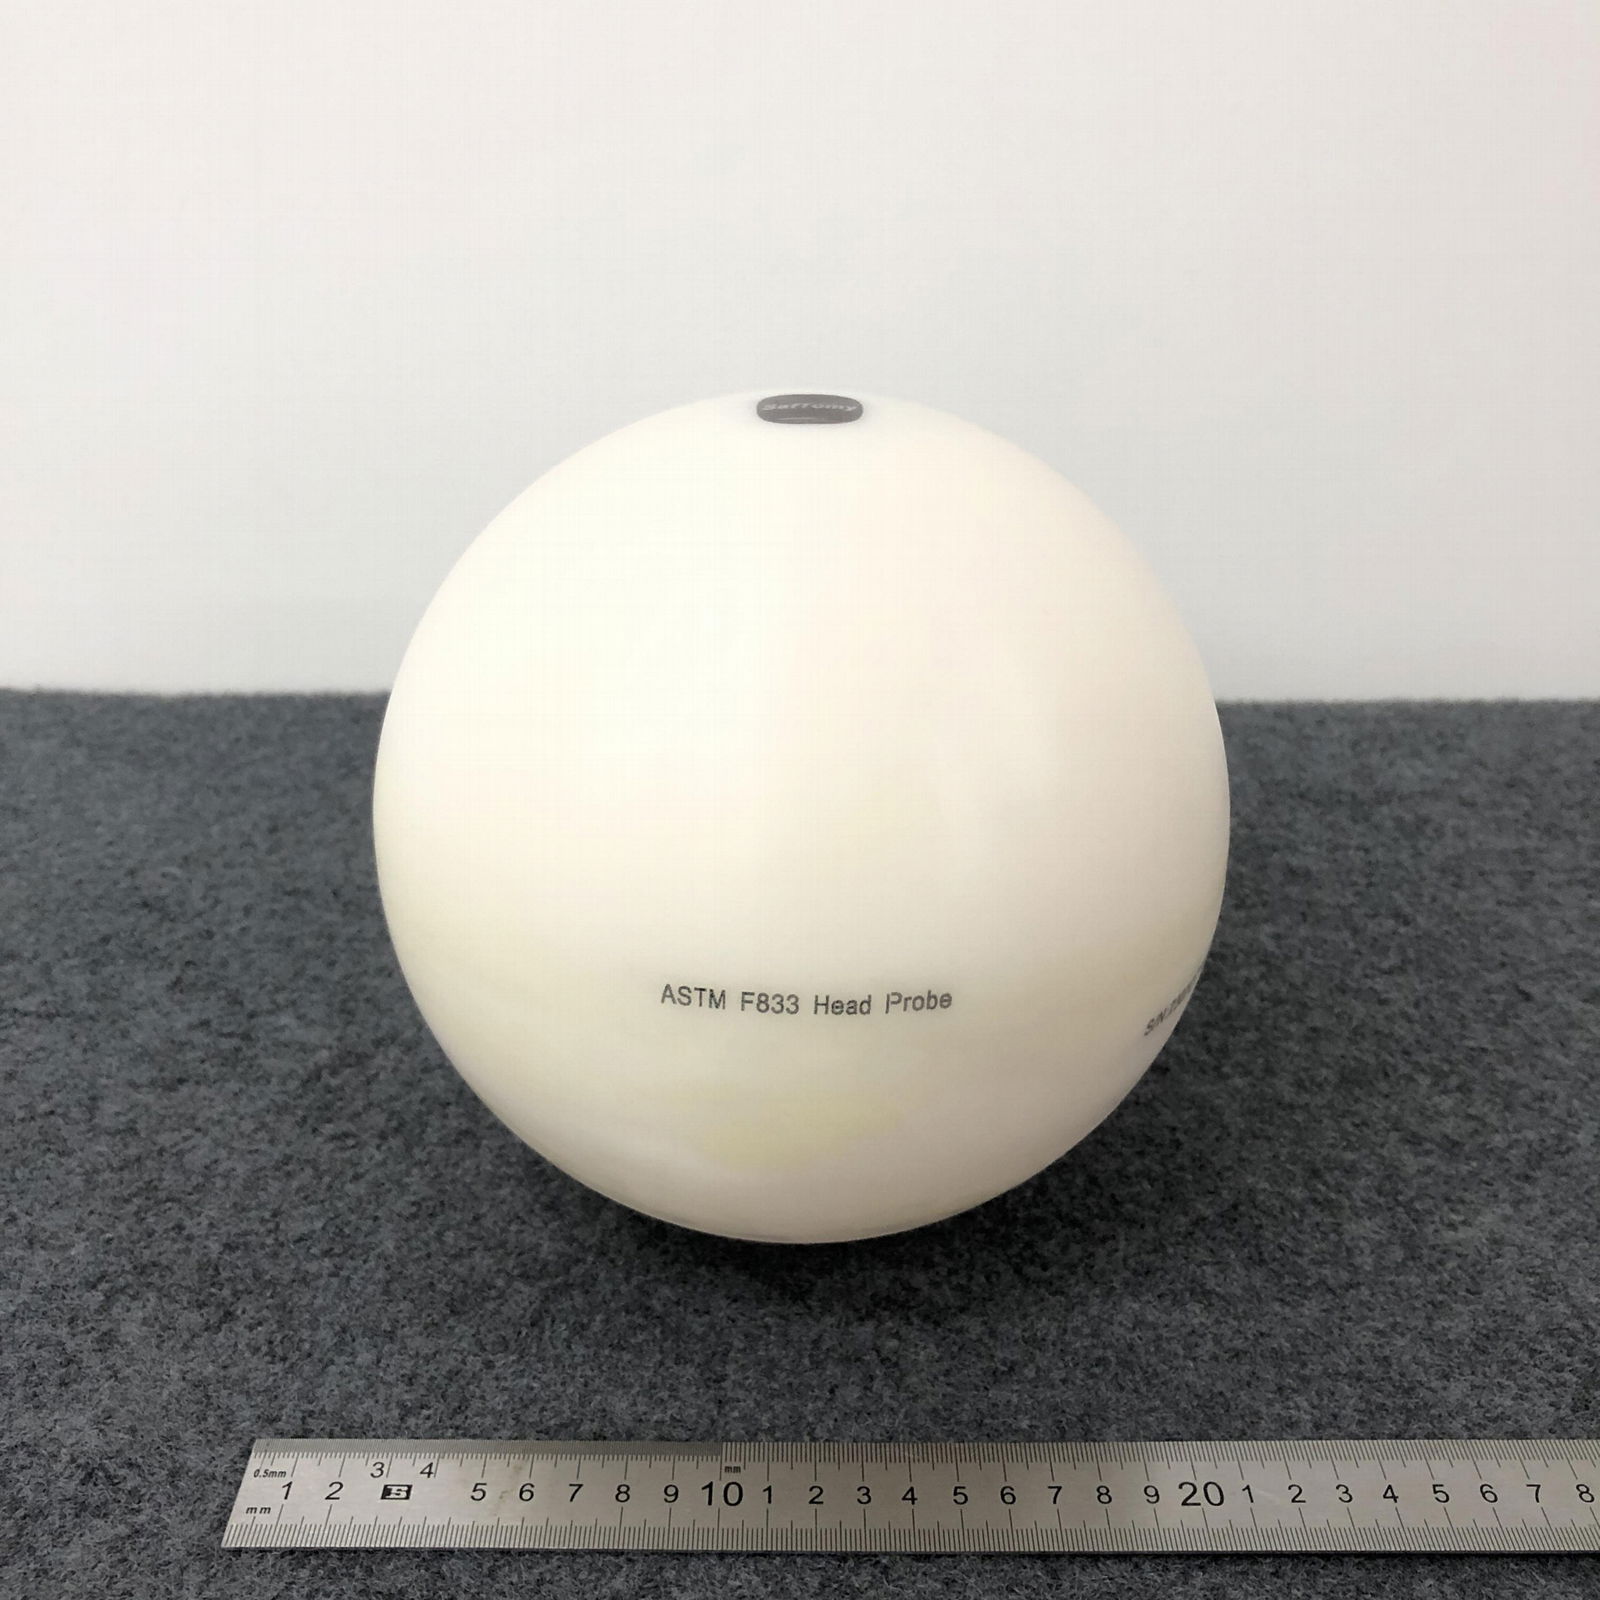 ASTM F833 Head Probe, 203mm Hollow Sphere